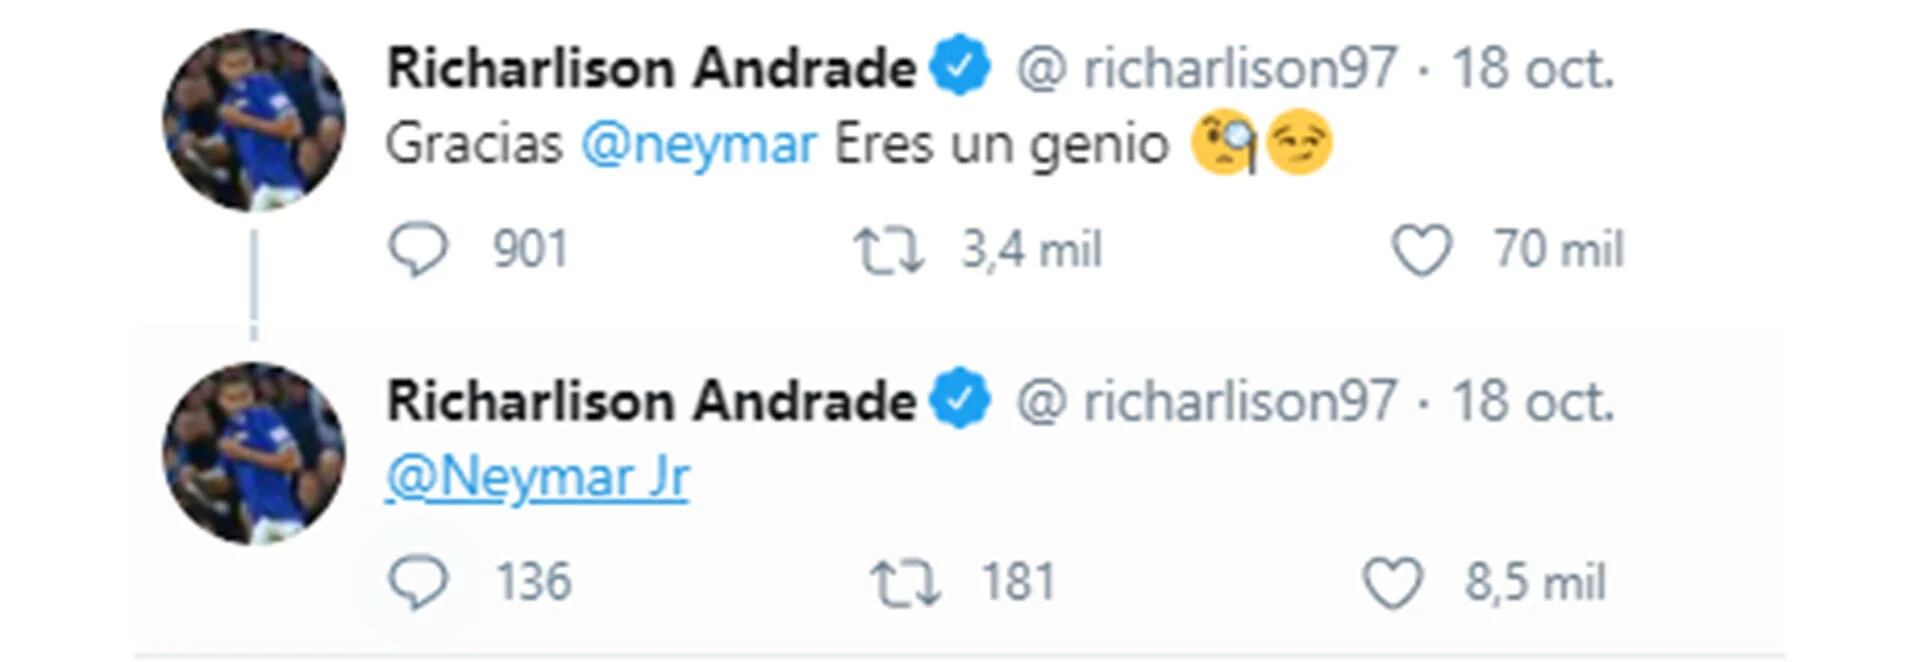 El celular de Richarlison "explotó" por un error de Neymar (Twitter)